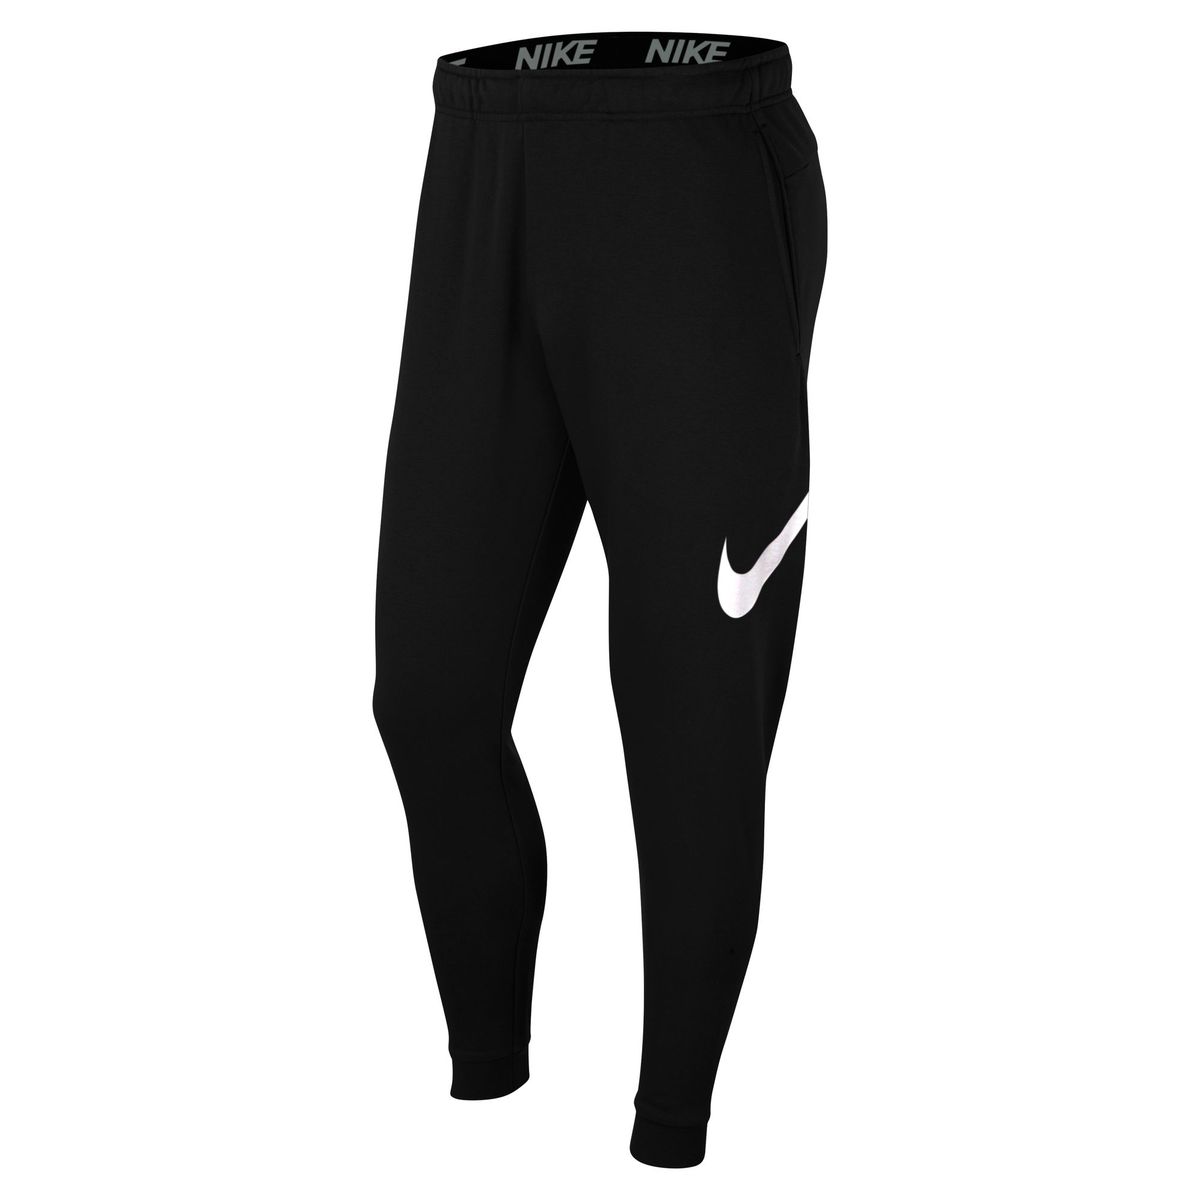 Nike Men's Dri-FIT Tapered Training Pants - Black/White | Shop Today ...